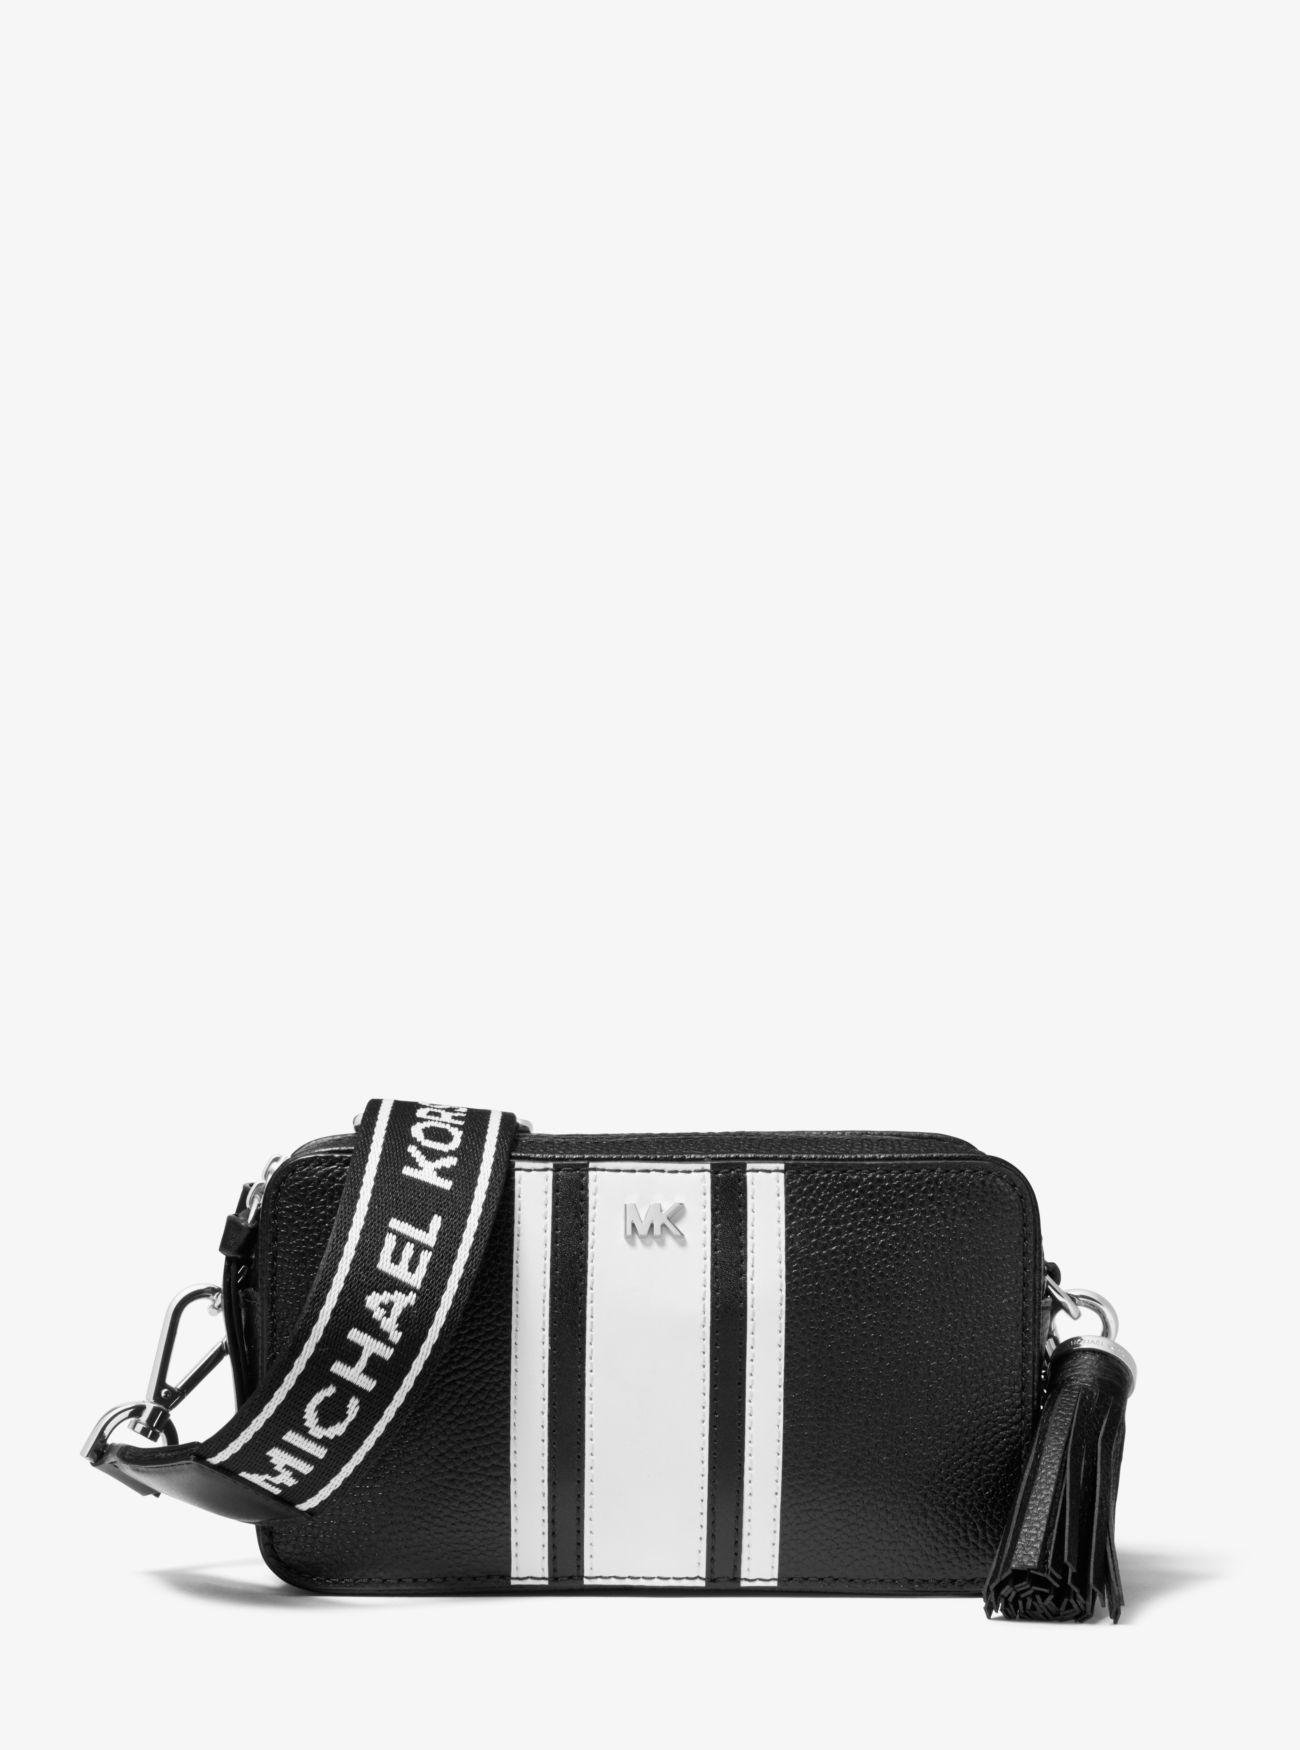 michael kors black and white handbag